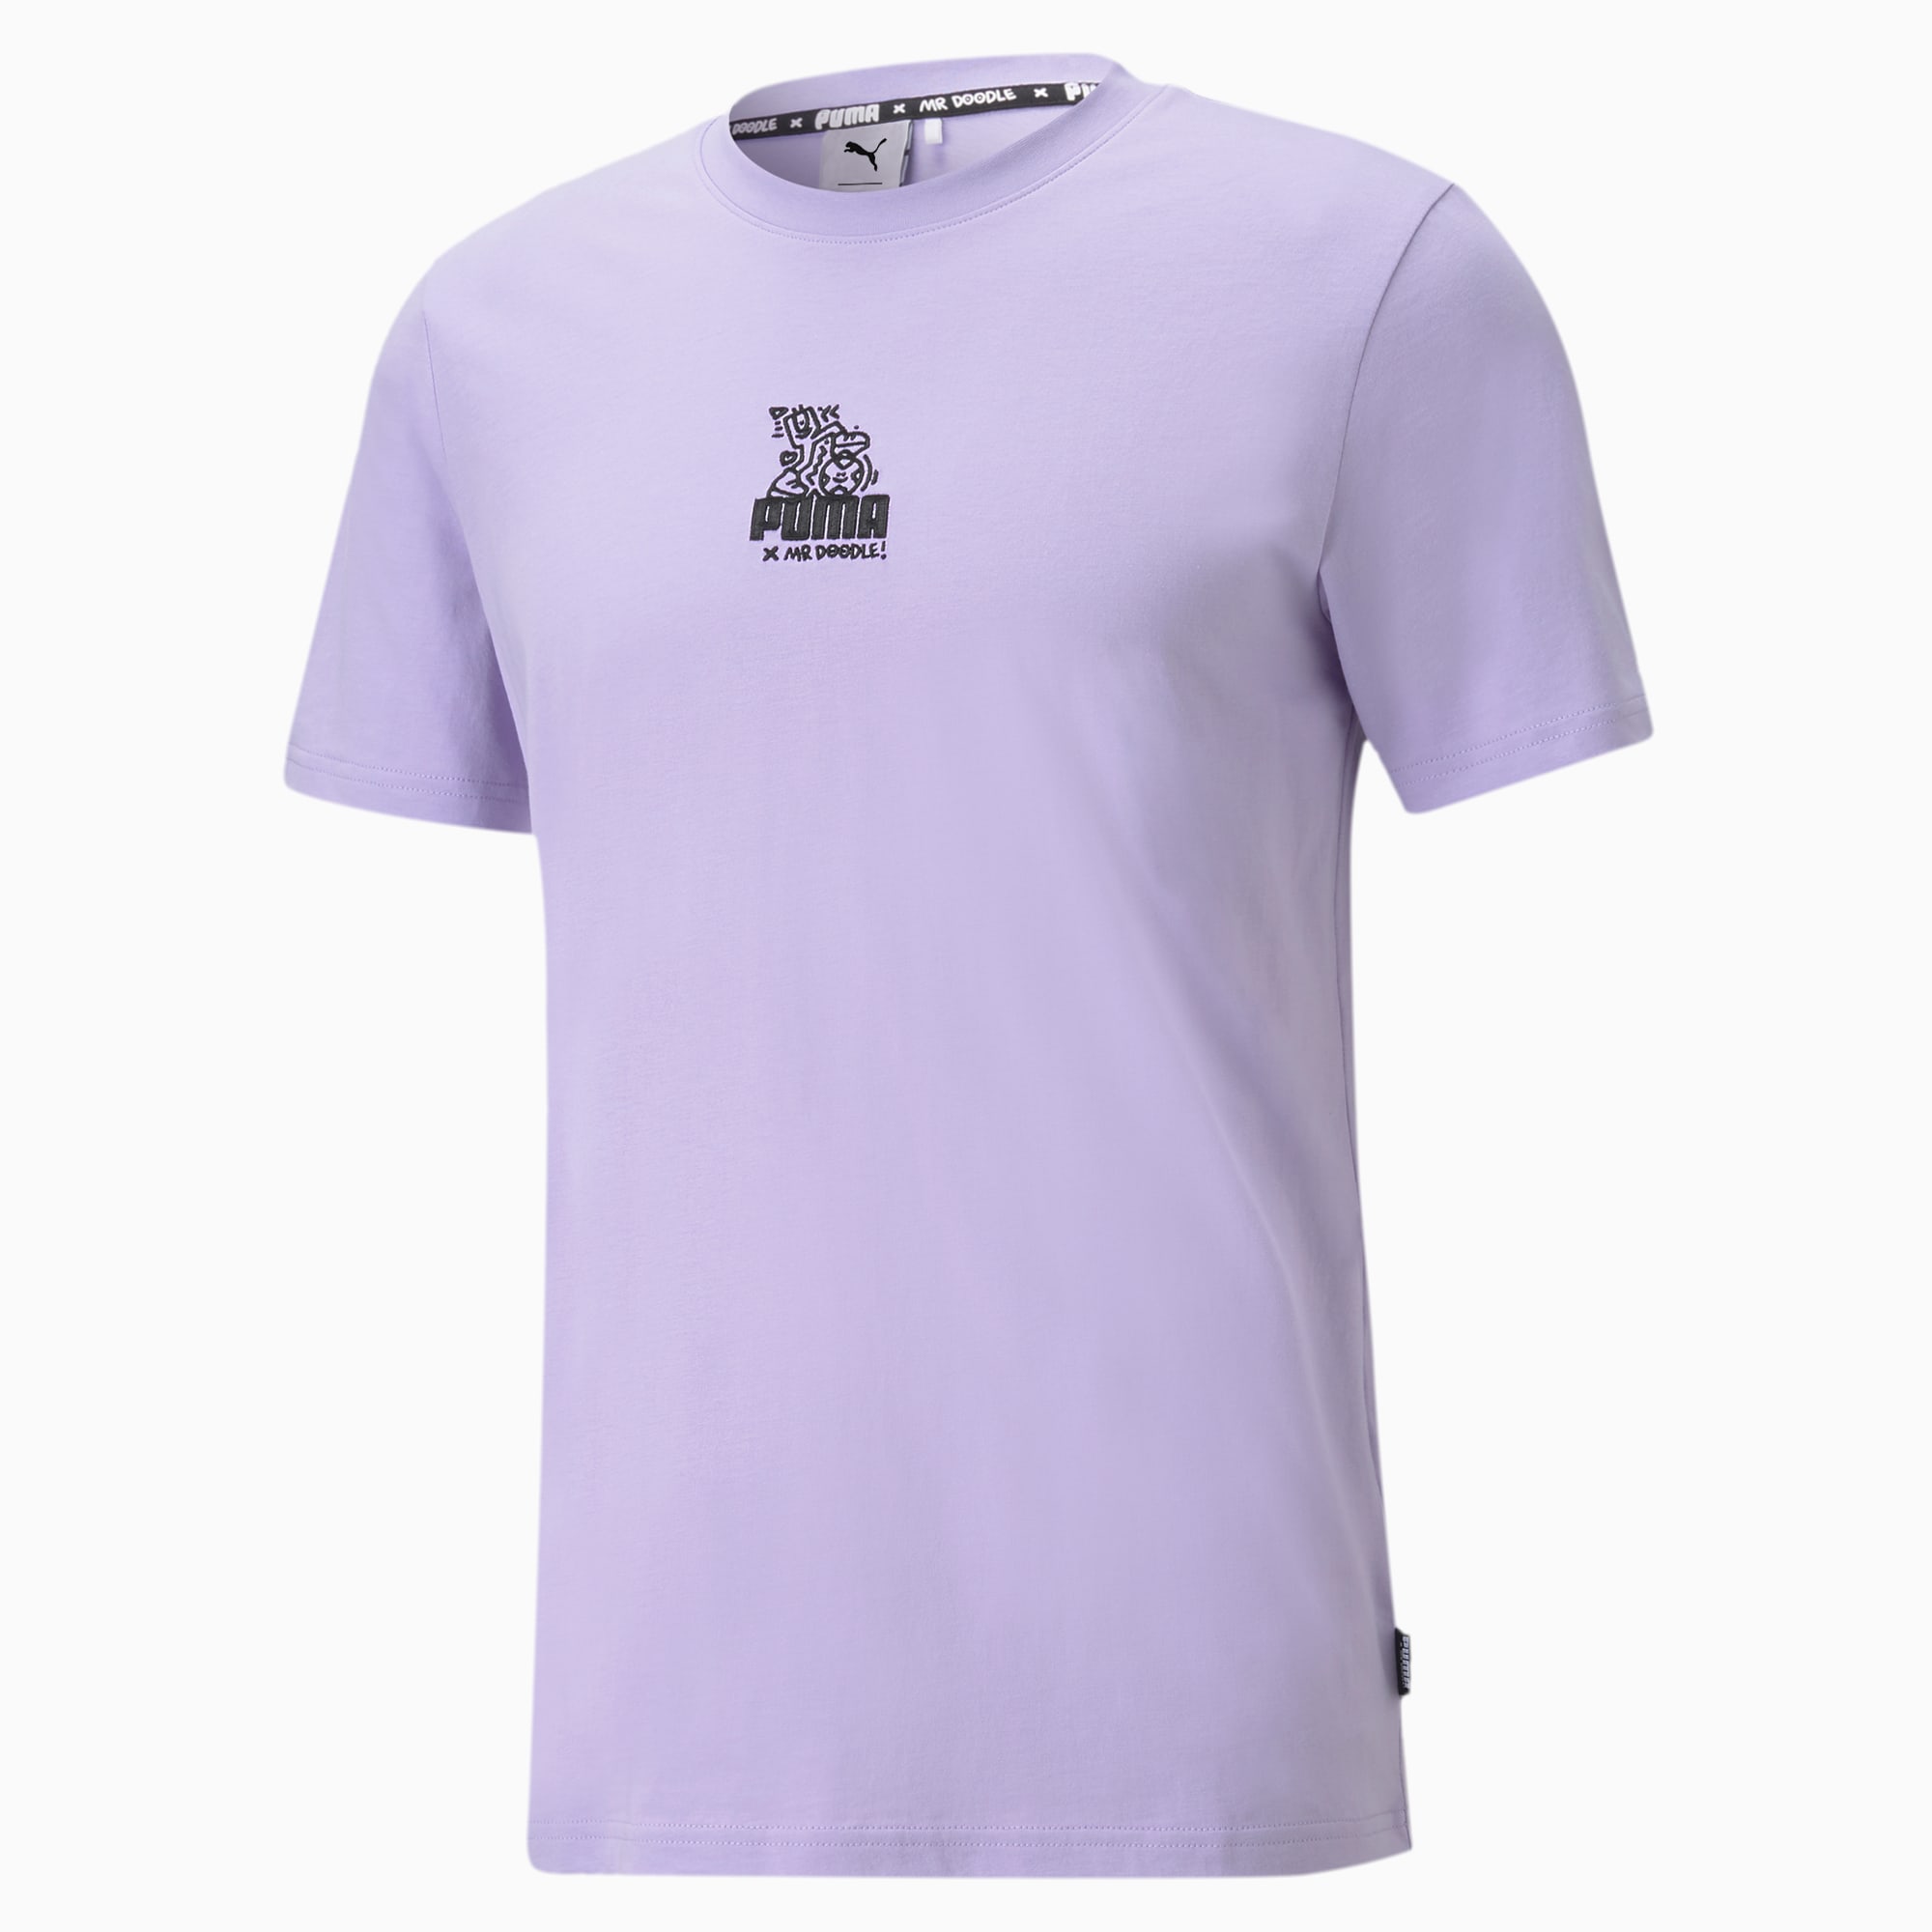 purple puma shirt